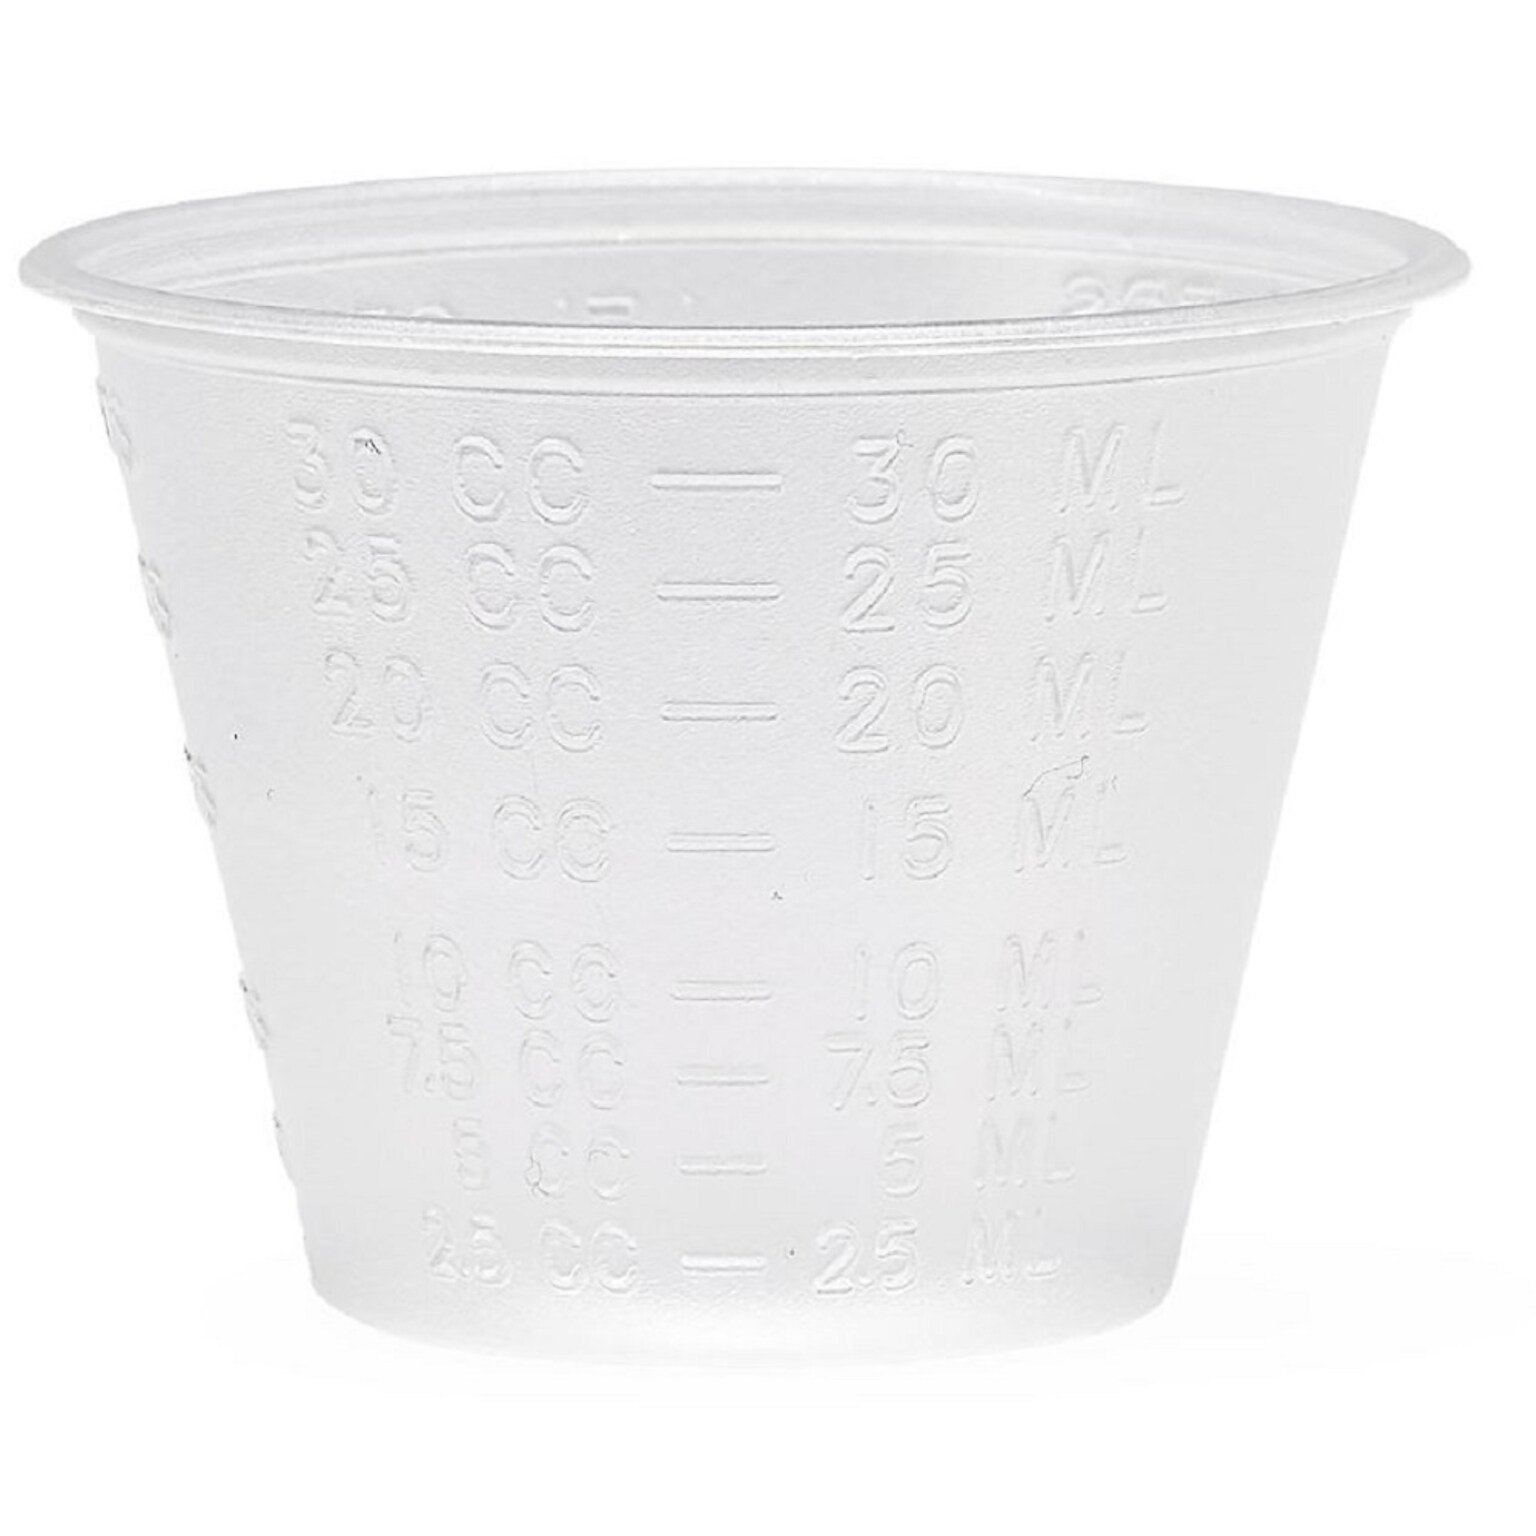 Medline 1 oz. Plastic Disposable Cup, Translucent, 5000/Carton (DYND80000)